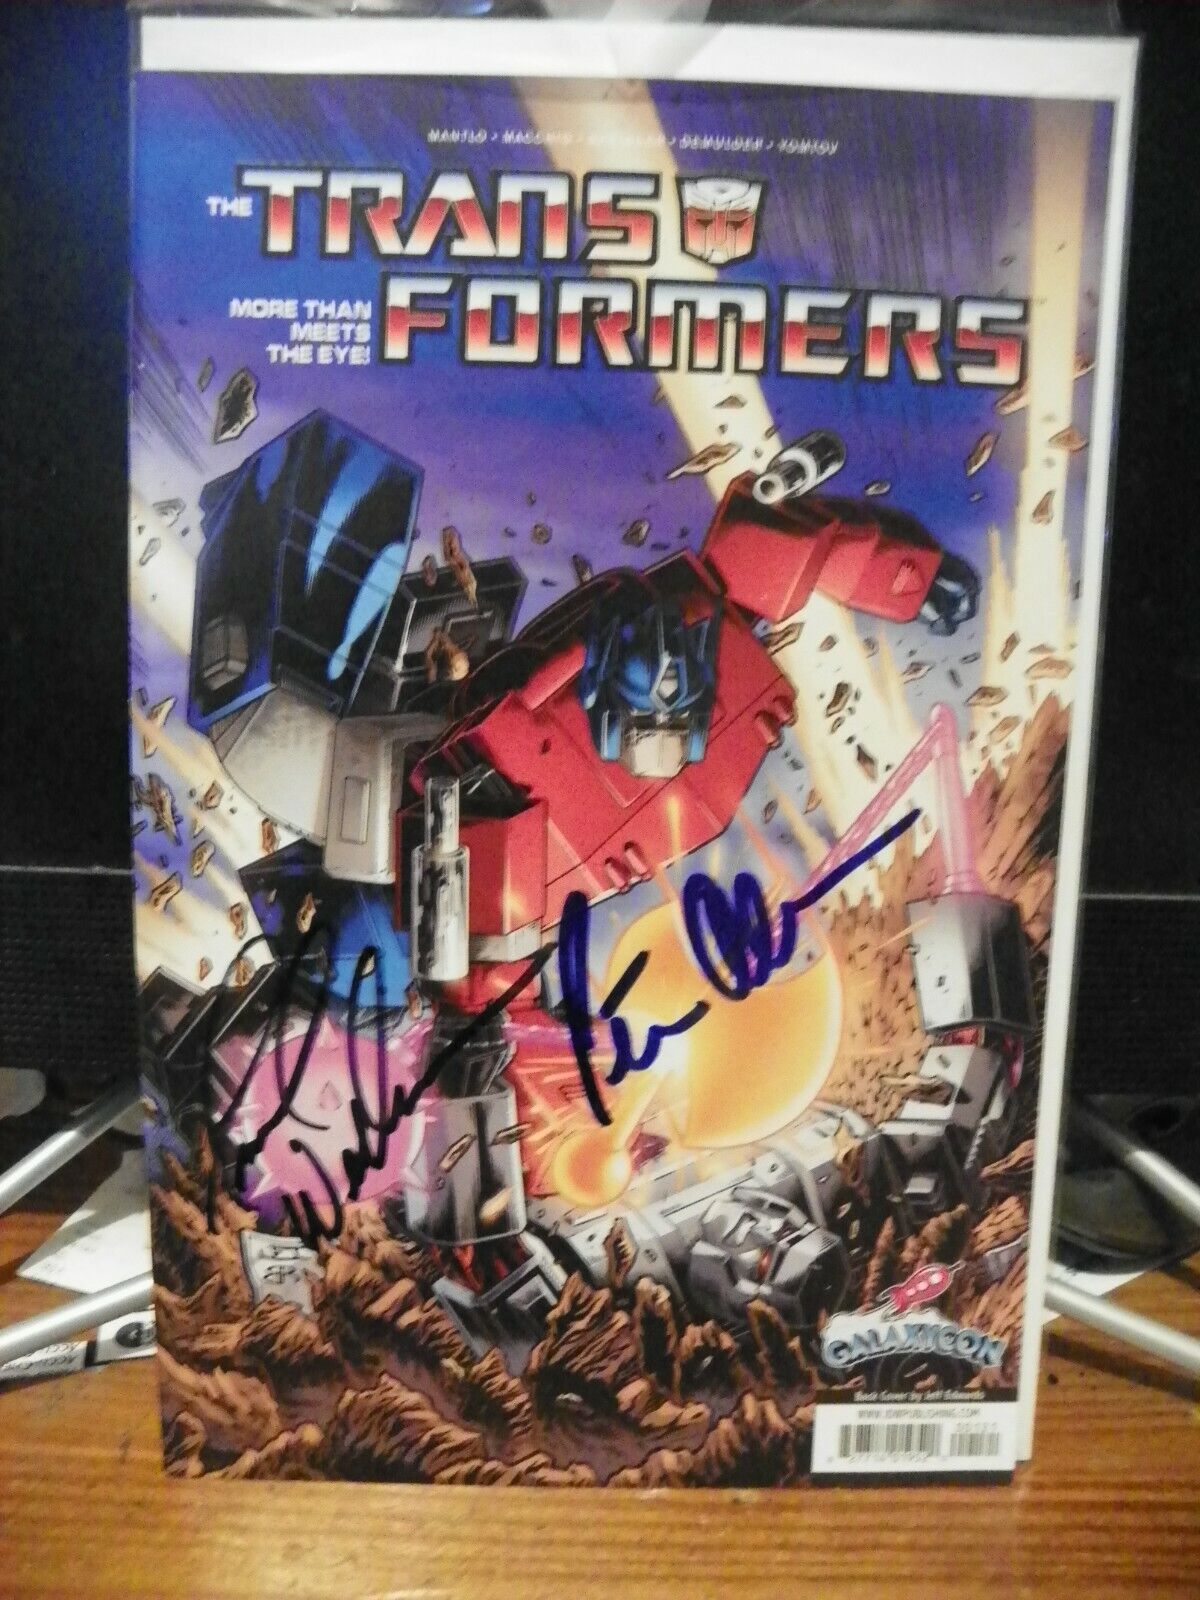 Transformers Max 57% OFF Peter Cullen Frank Welker Autographed Beckett book Comic COA Signed San Diego Mall